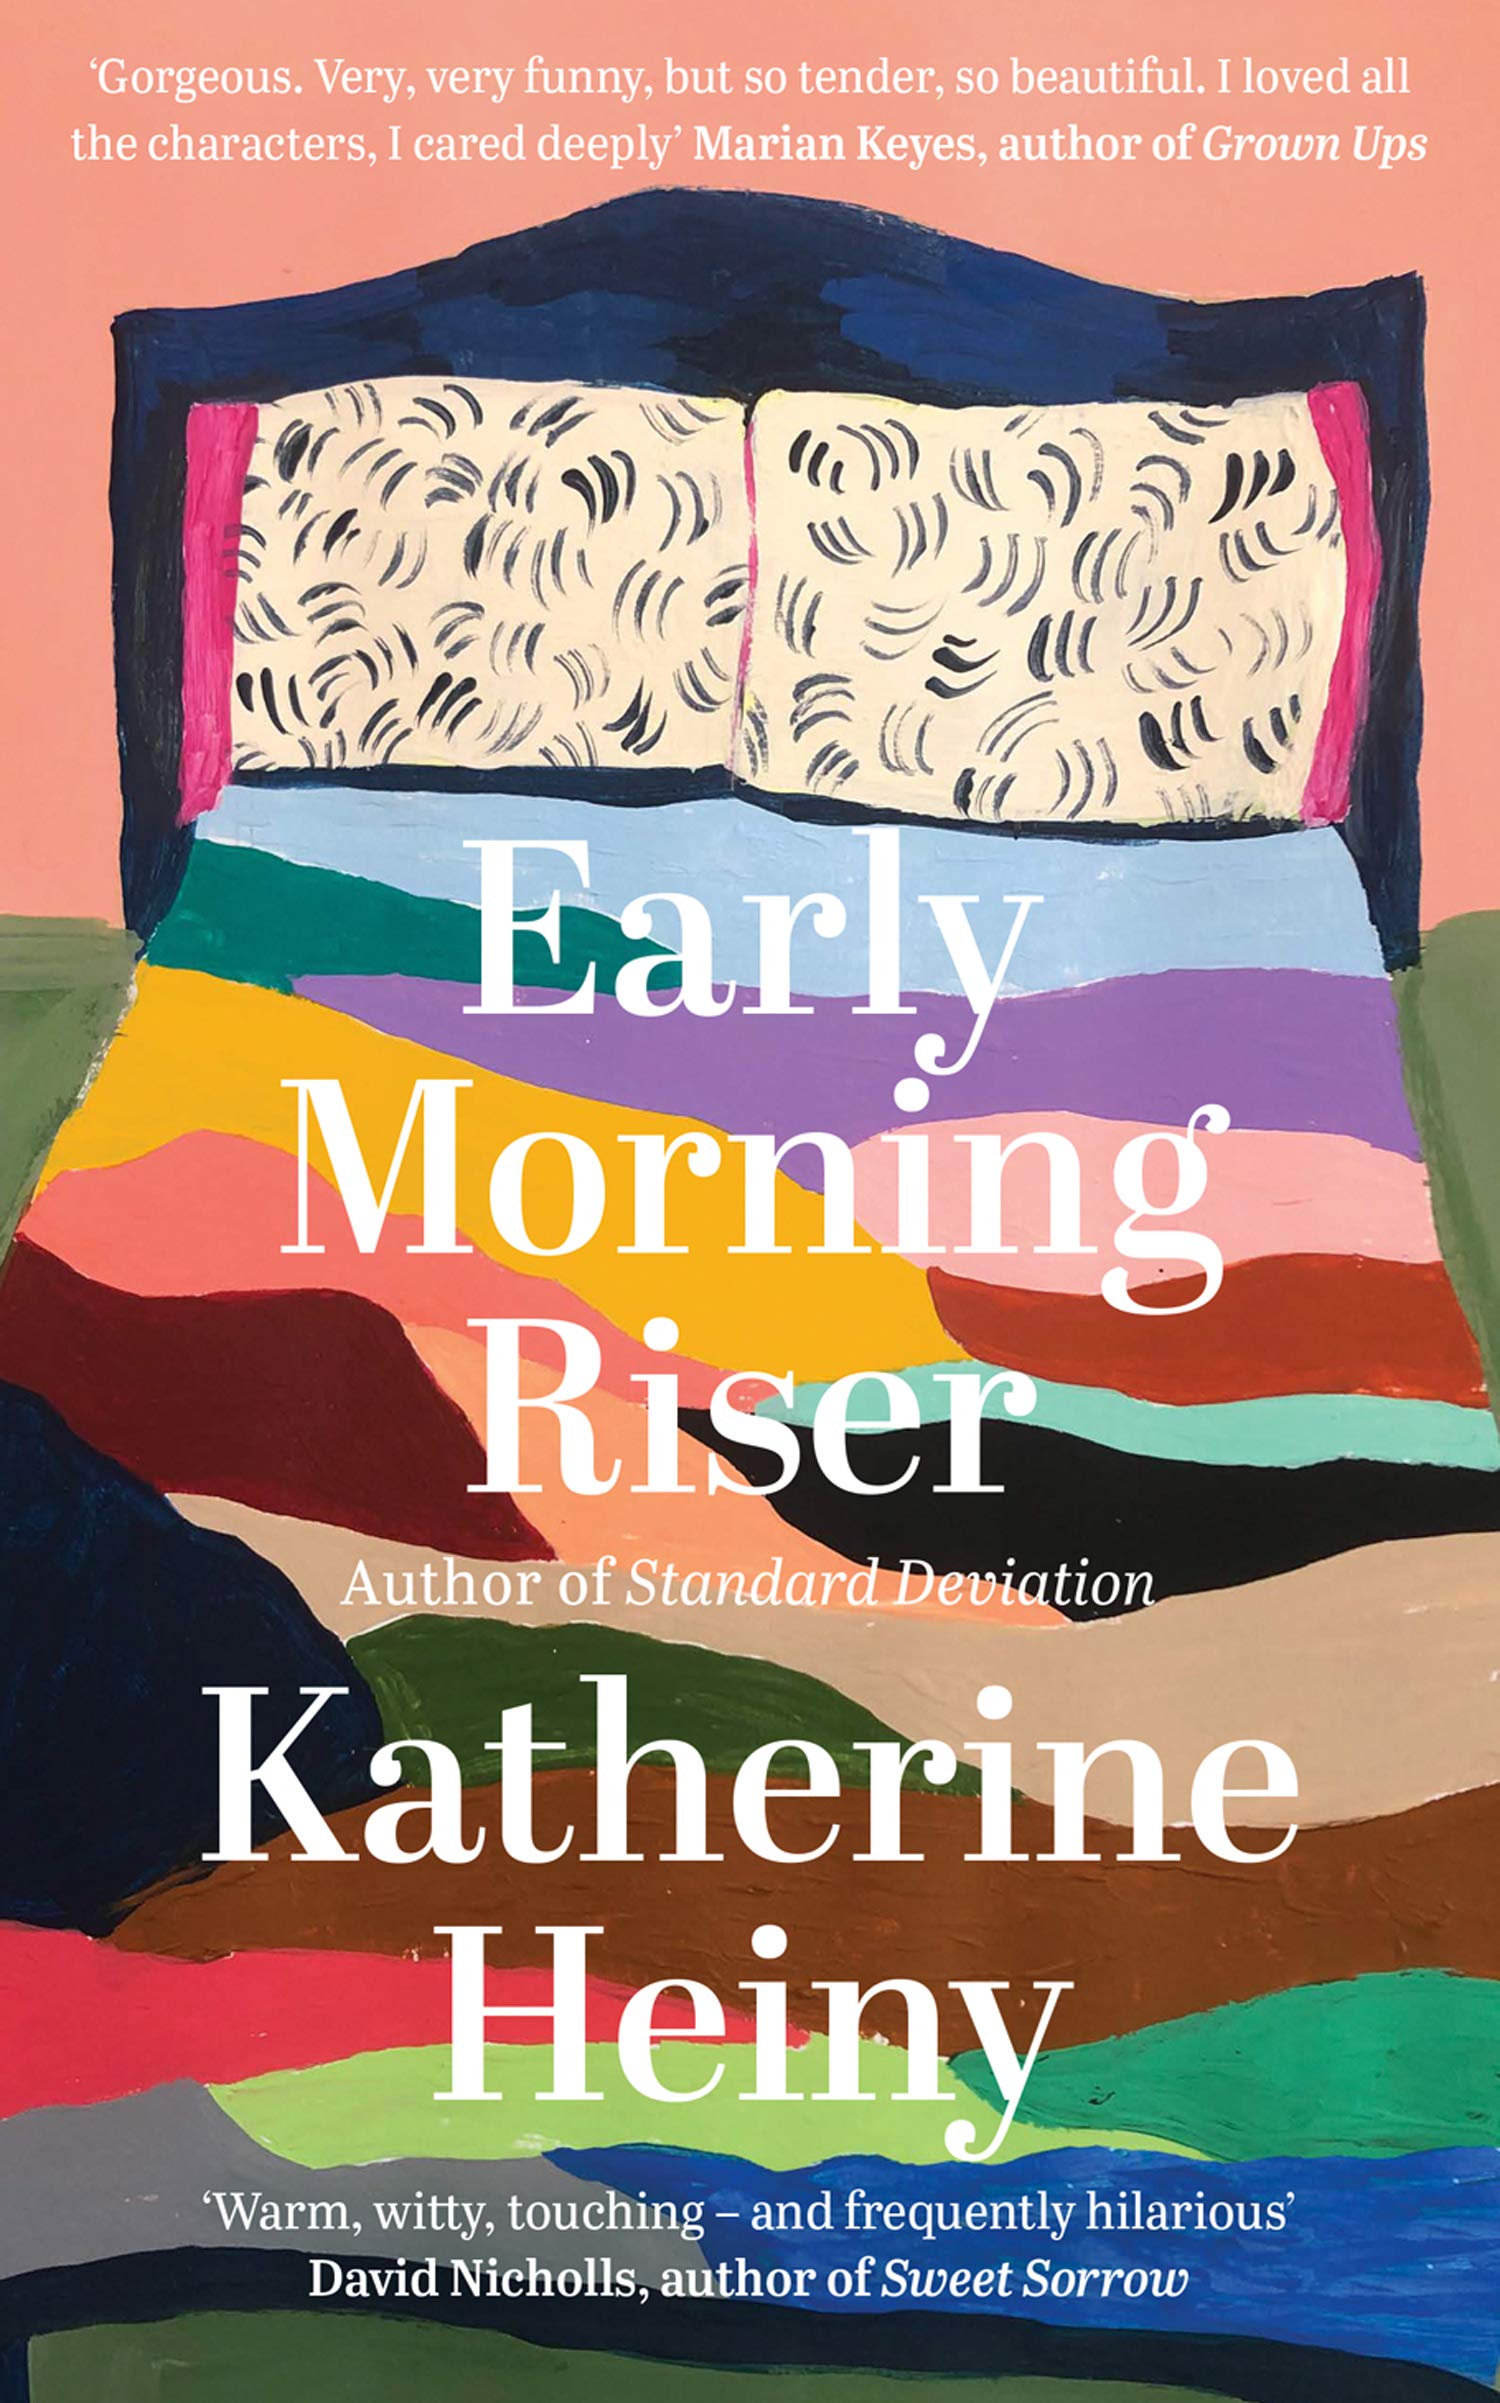 Image for "Early Morning Riser"